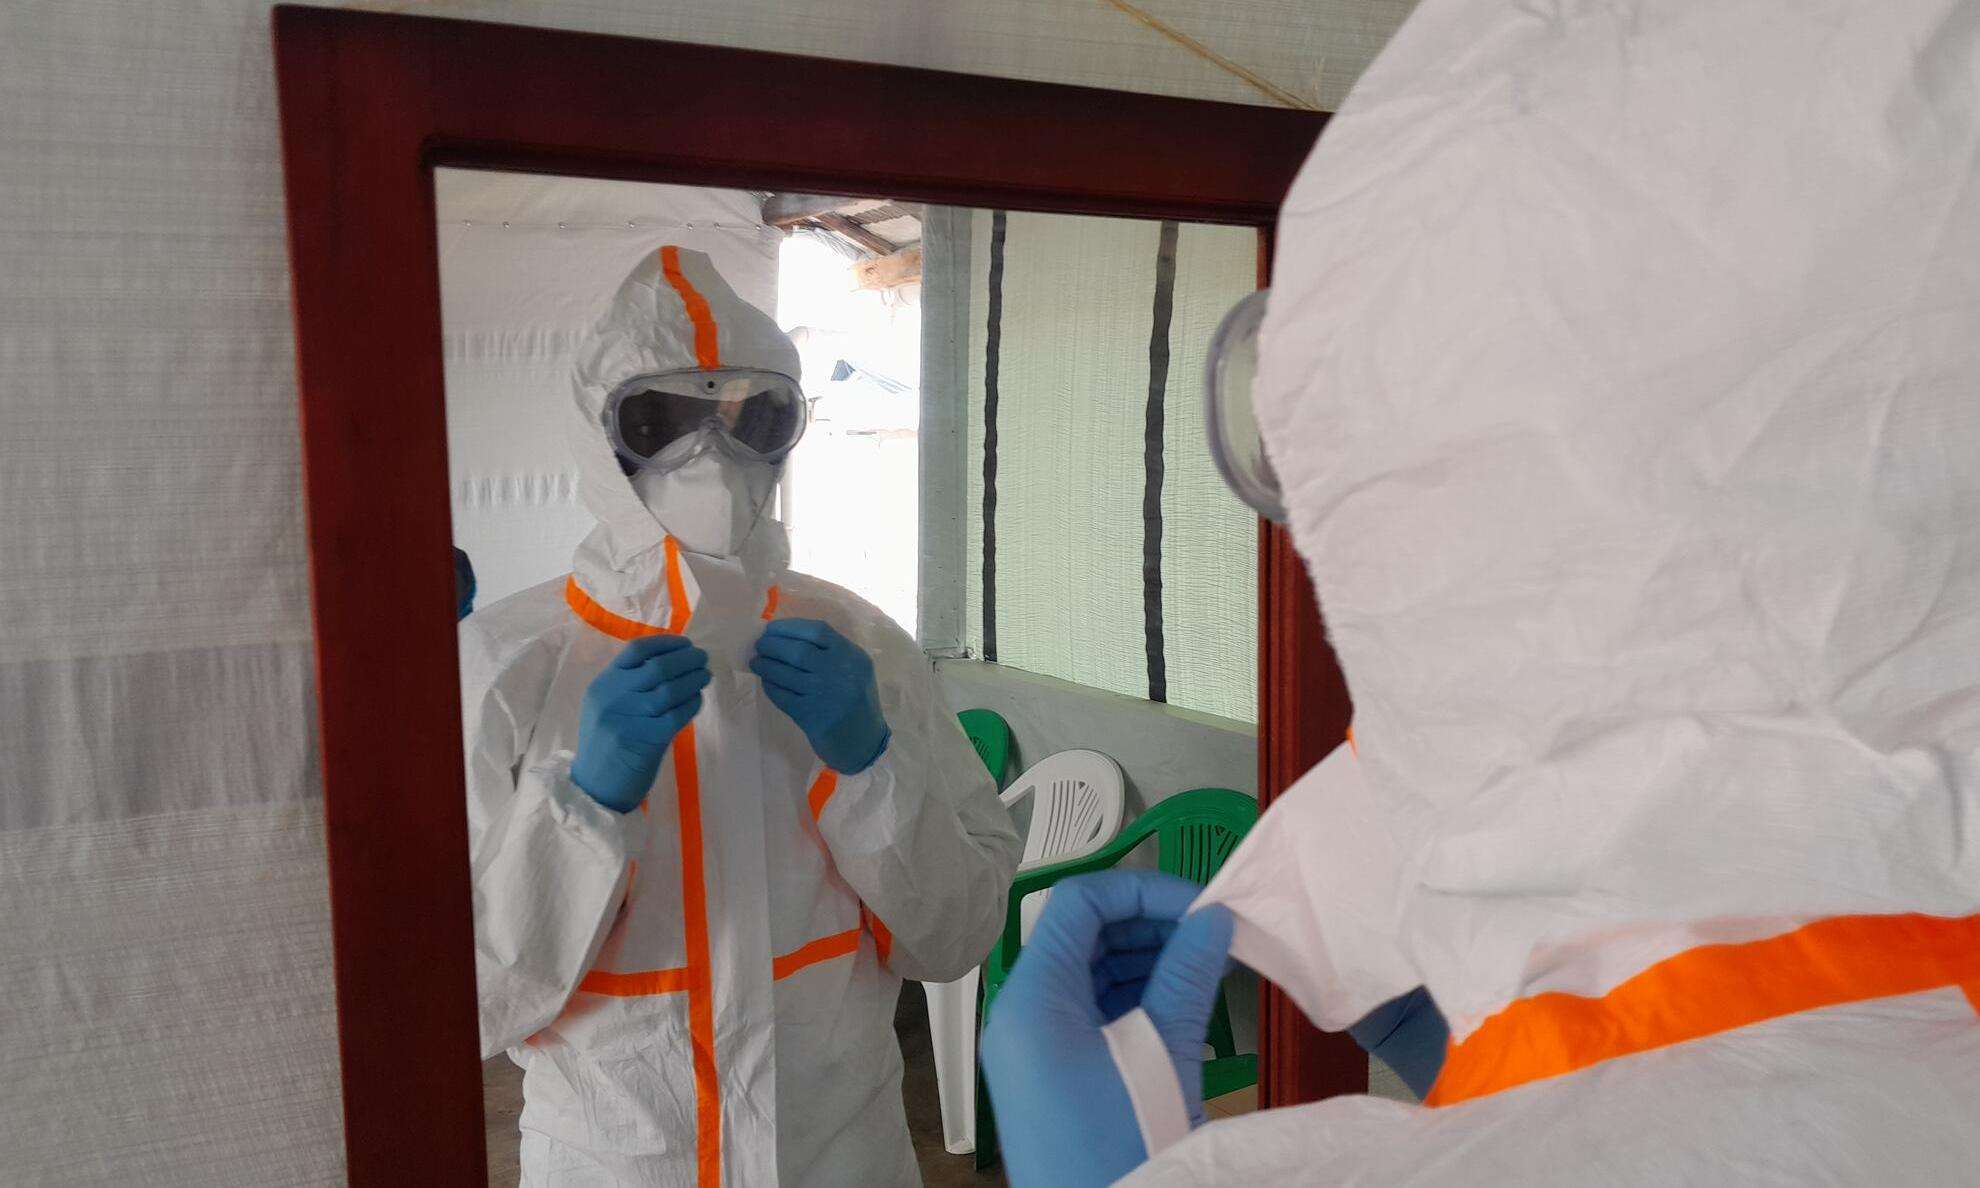 Ebola outbreak in Uganda, Mubende Ebola Treatment Center